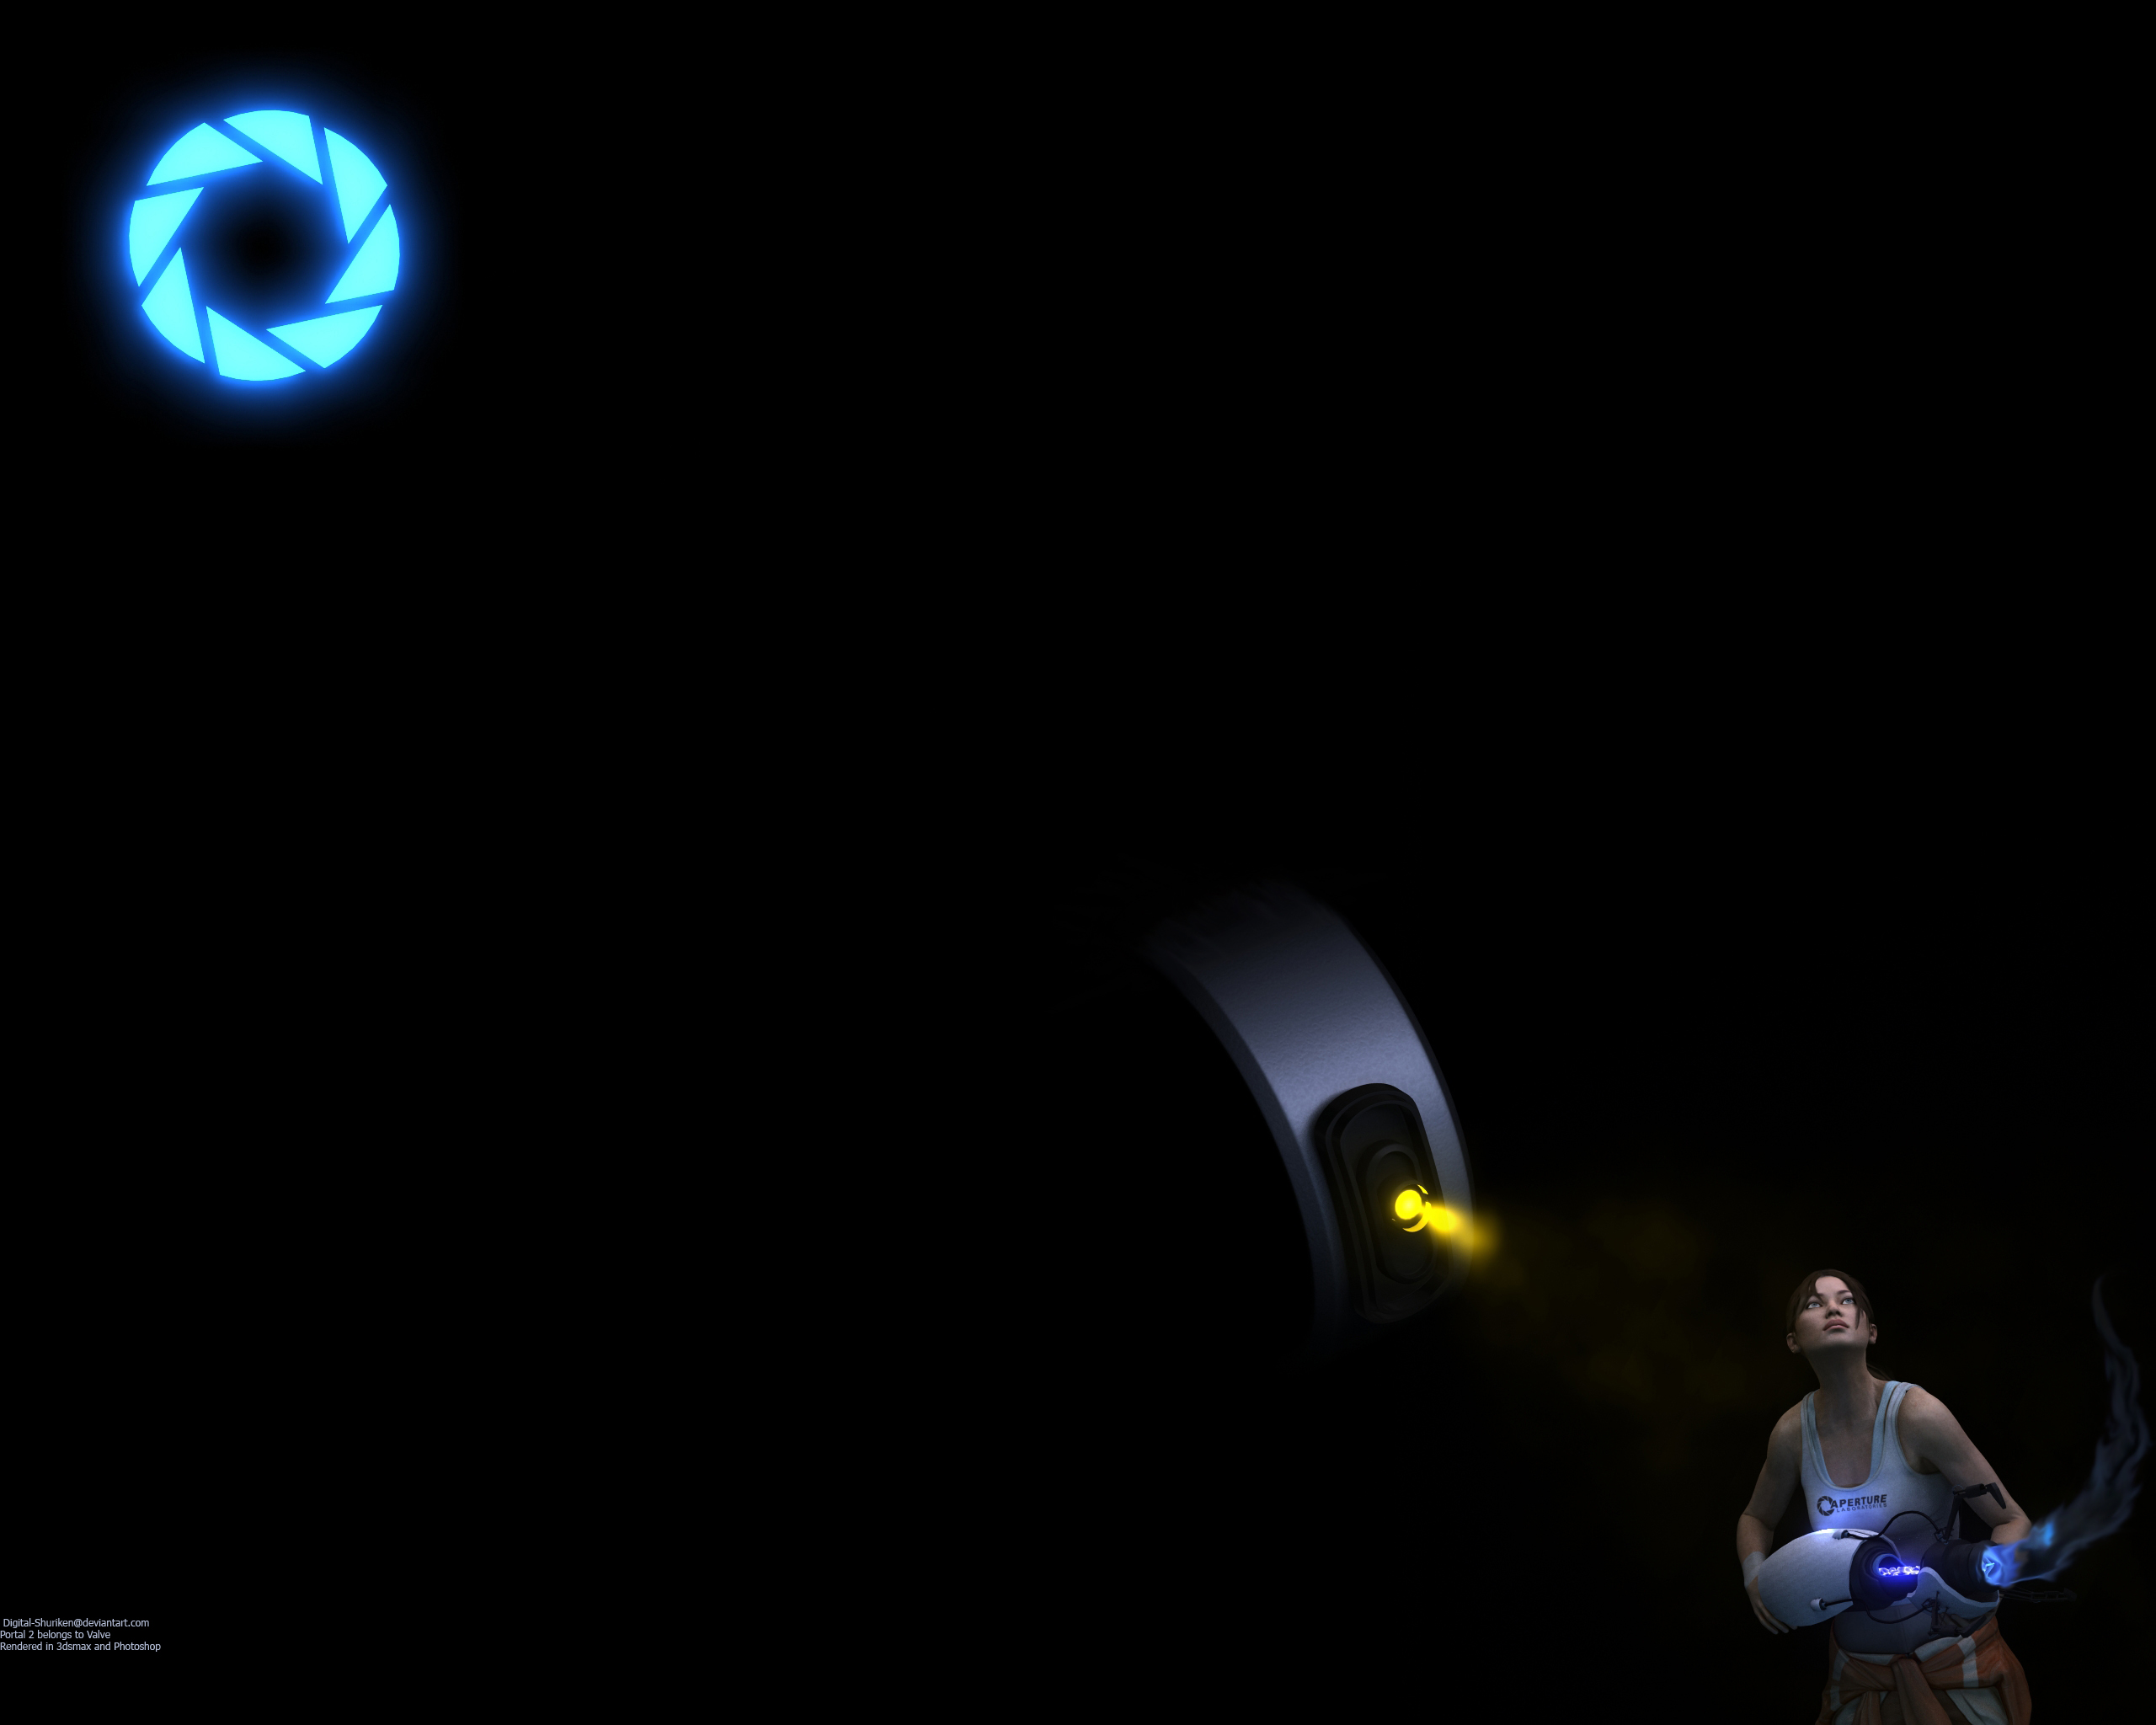 Portal 2 desktop background by digital shuriken on deviantART